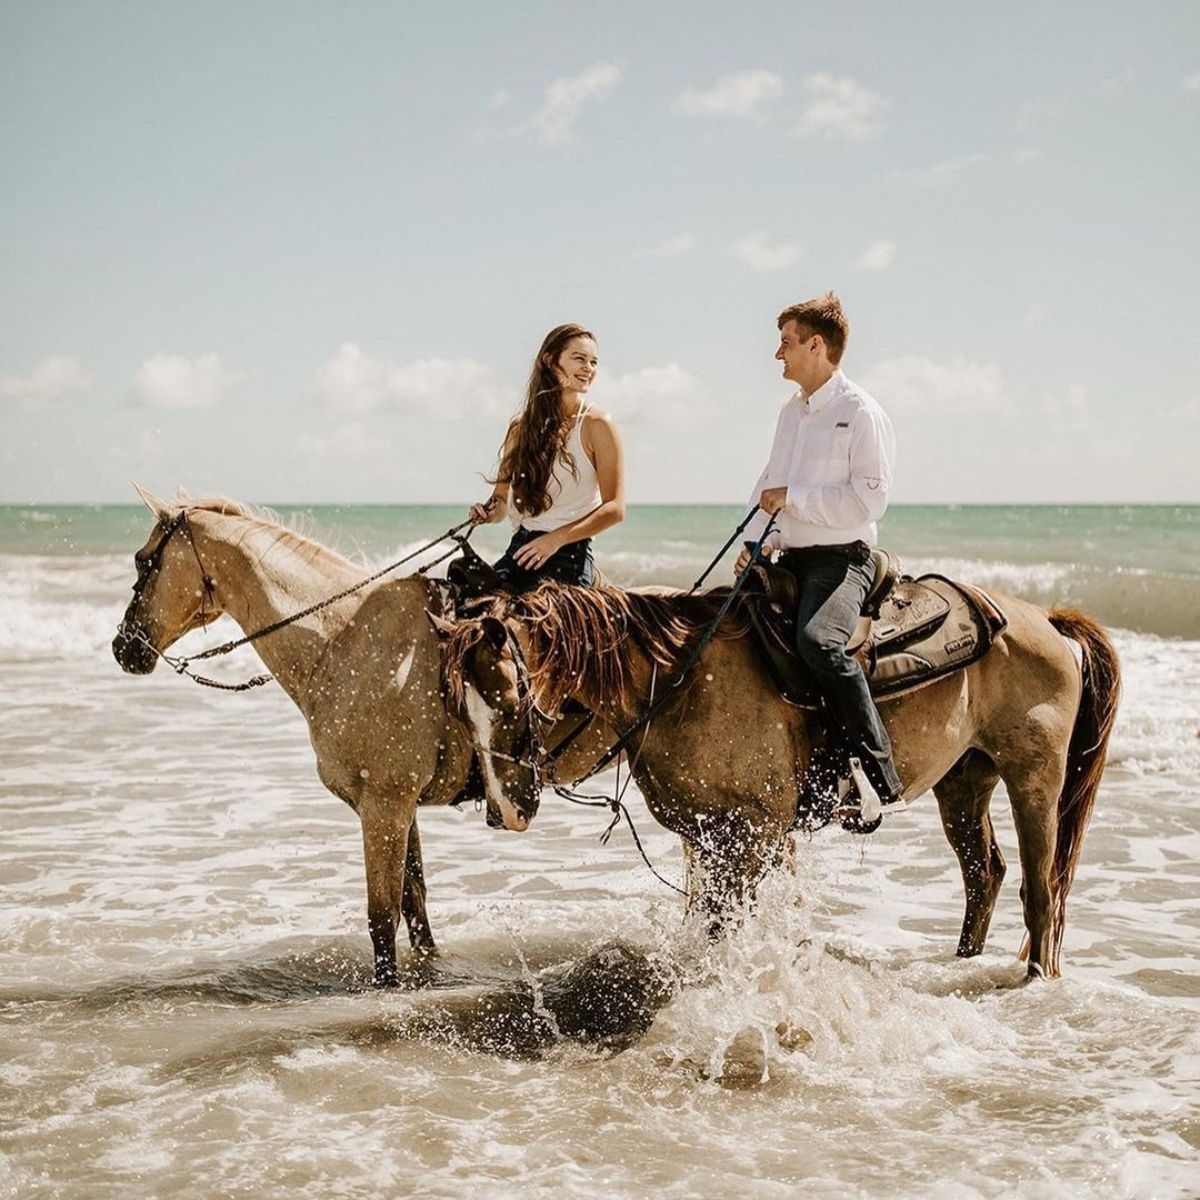 A young couple enjoys a horse ride on the shore.